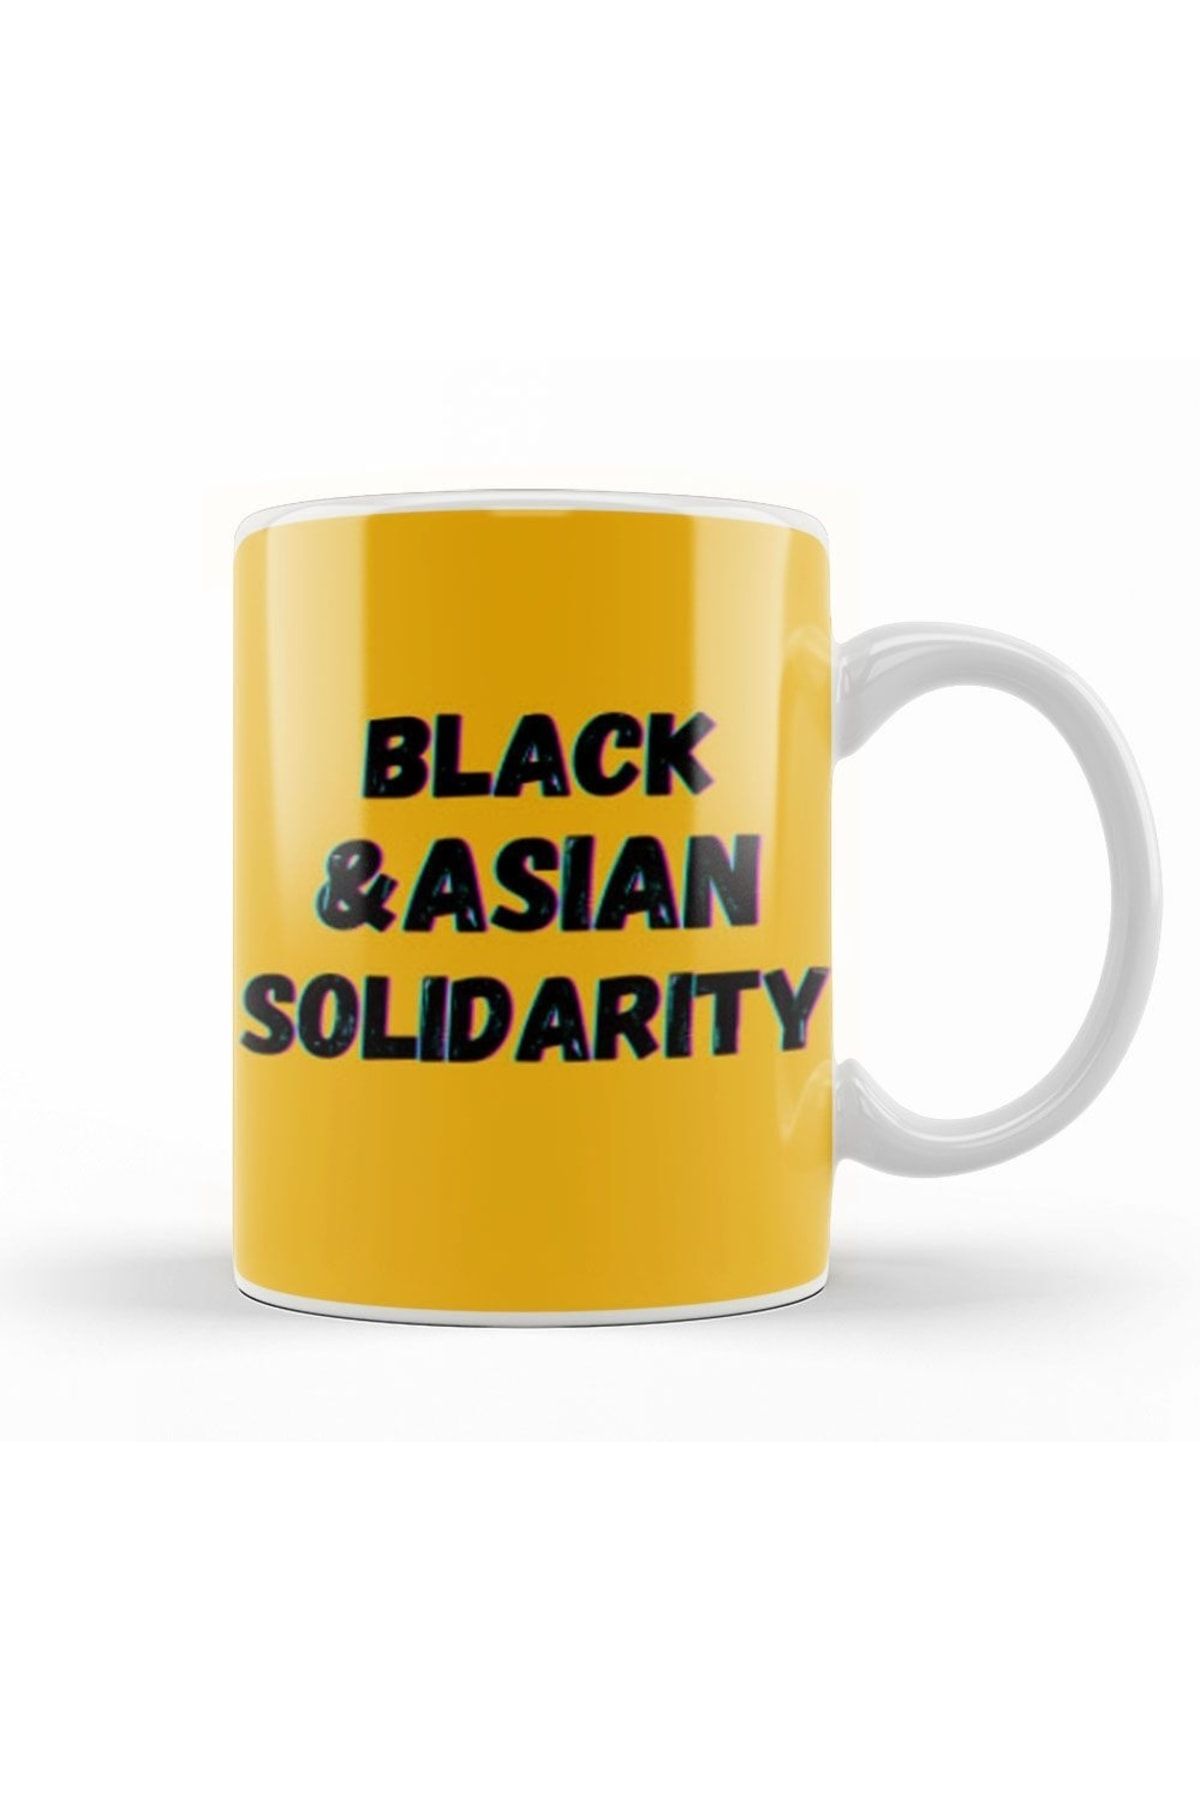 Humuts Black Asian Solidarity Black History Month Blm Black Lives Matter Kupa Bardak Porselen